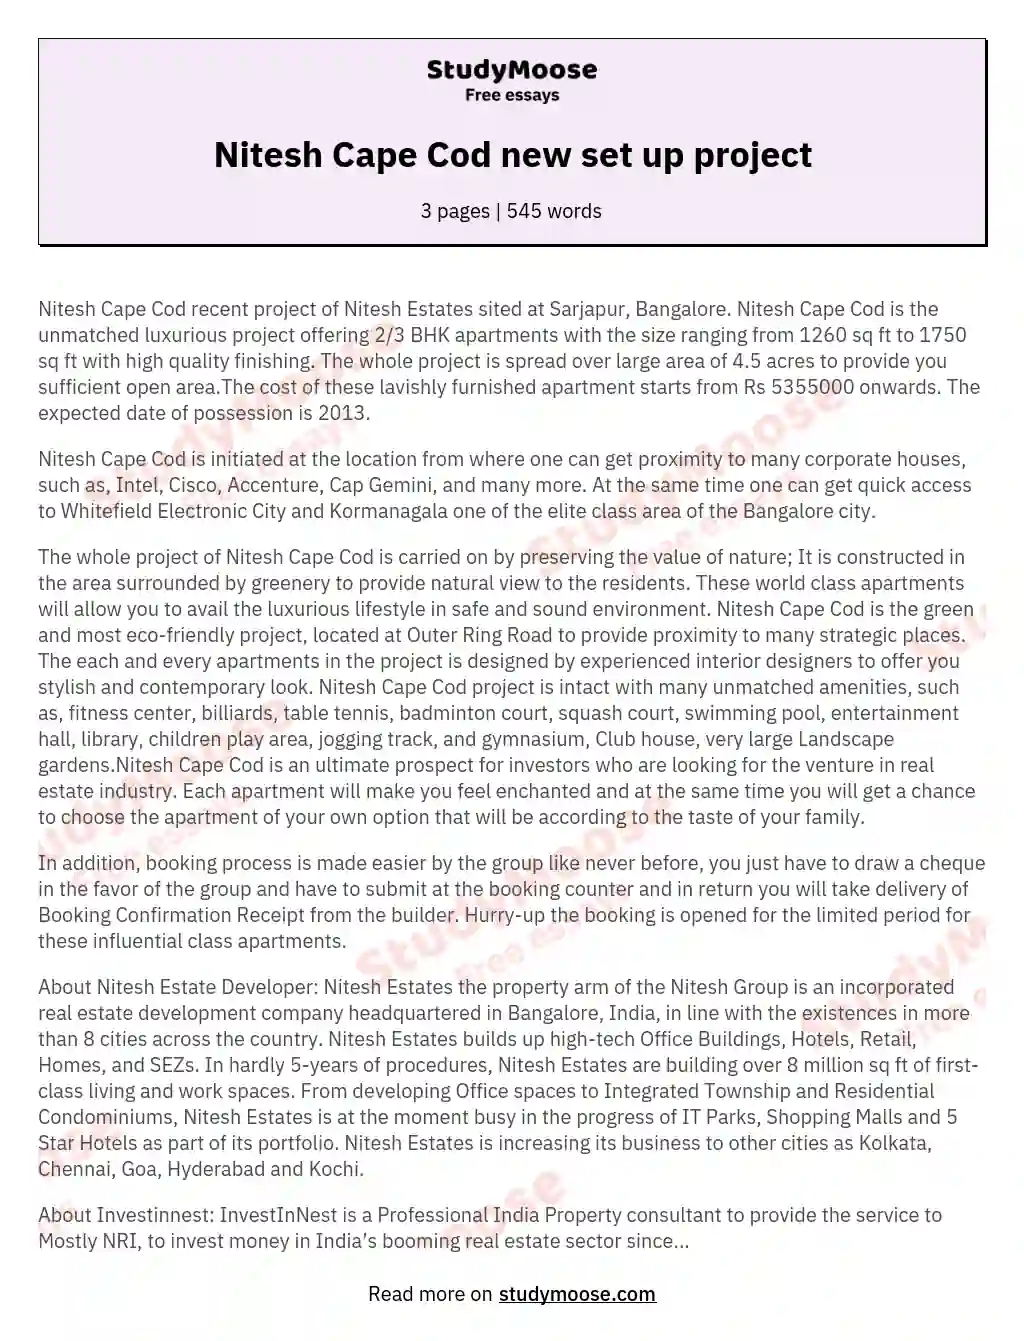 Nitesh Cape Cod new set up project essay